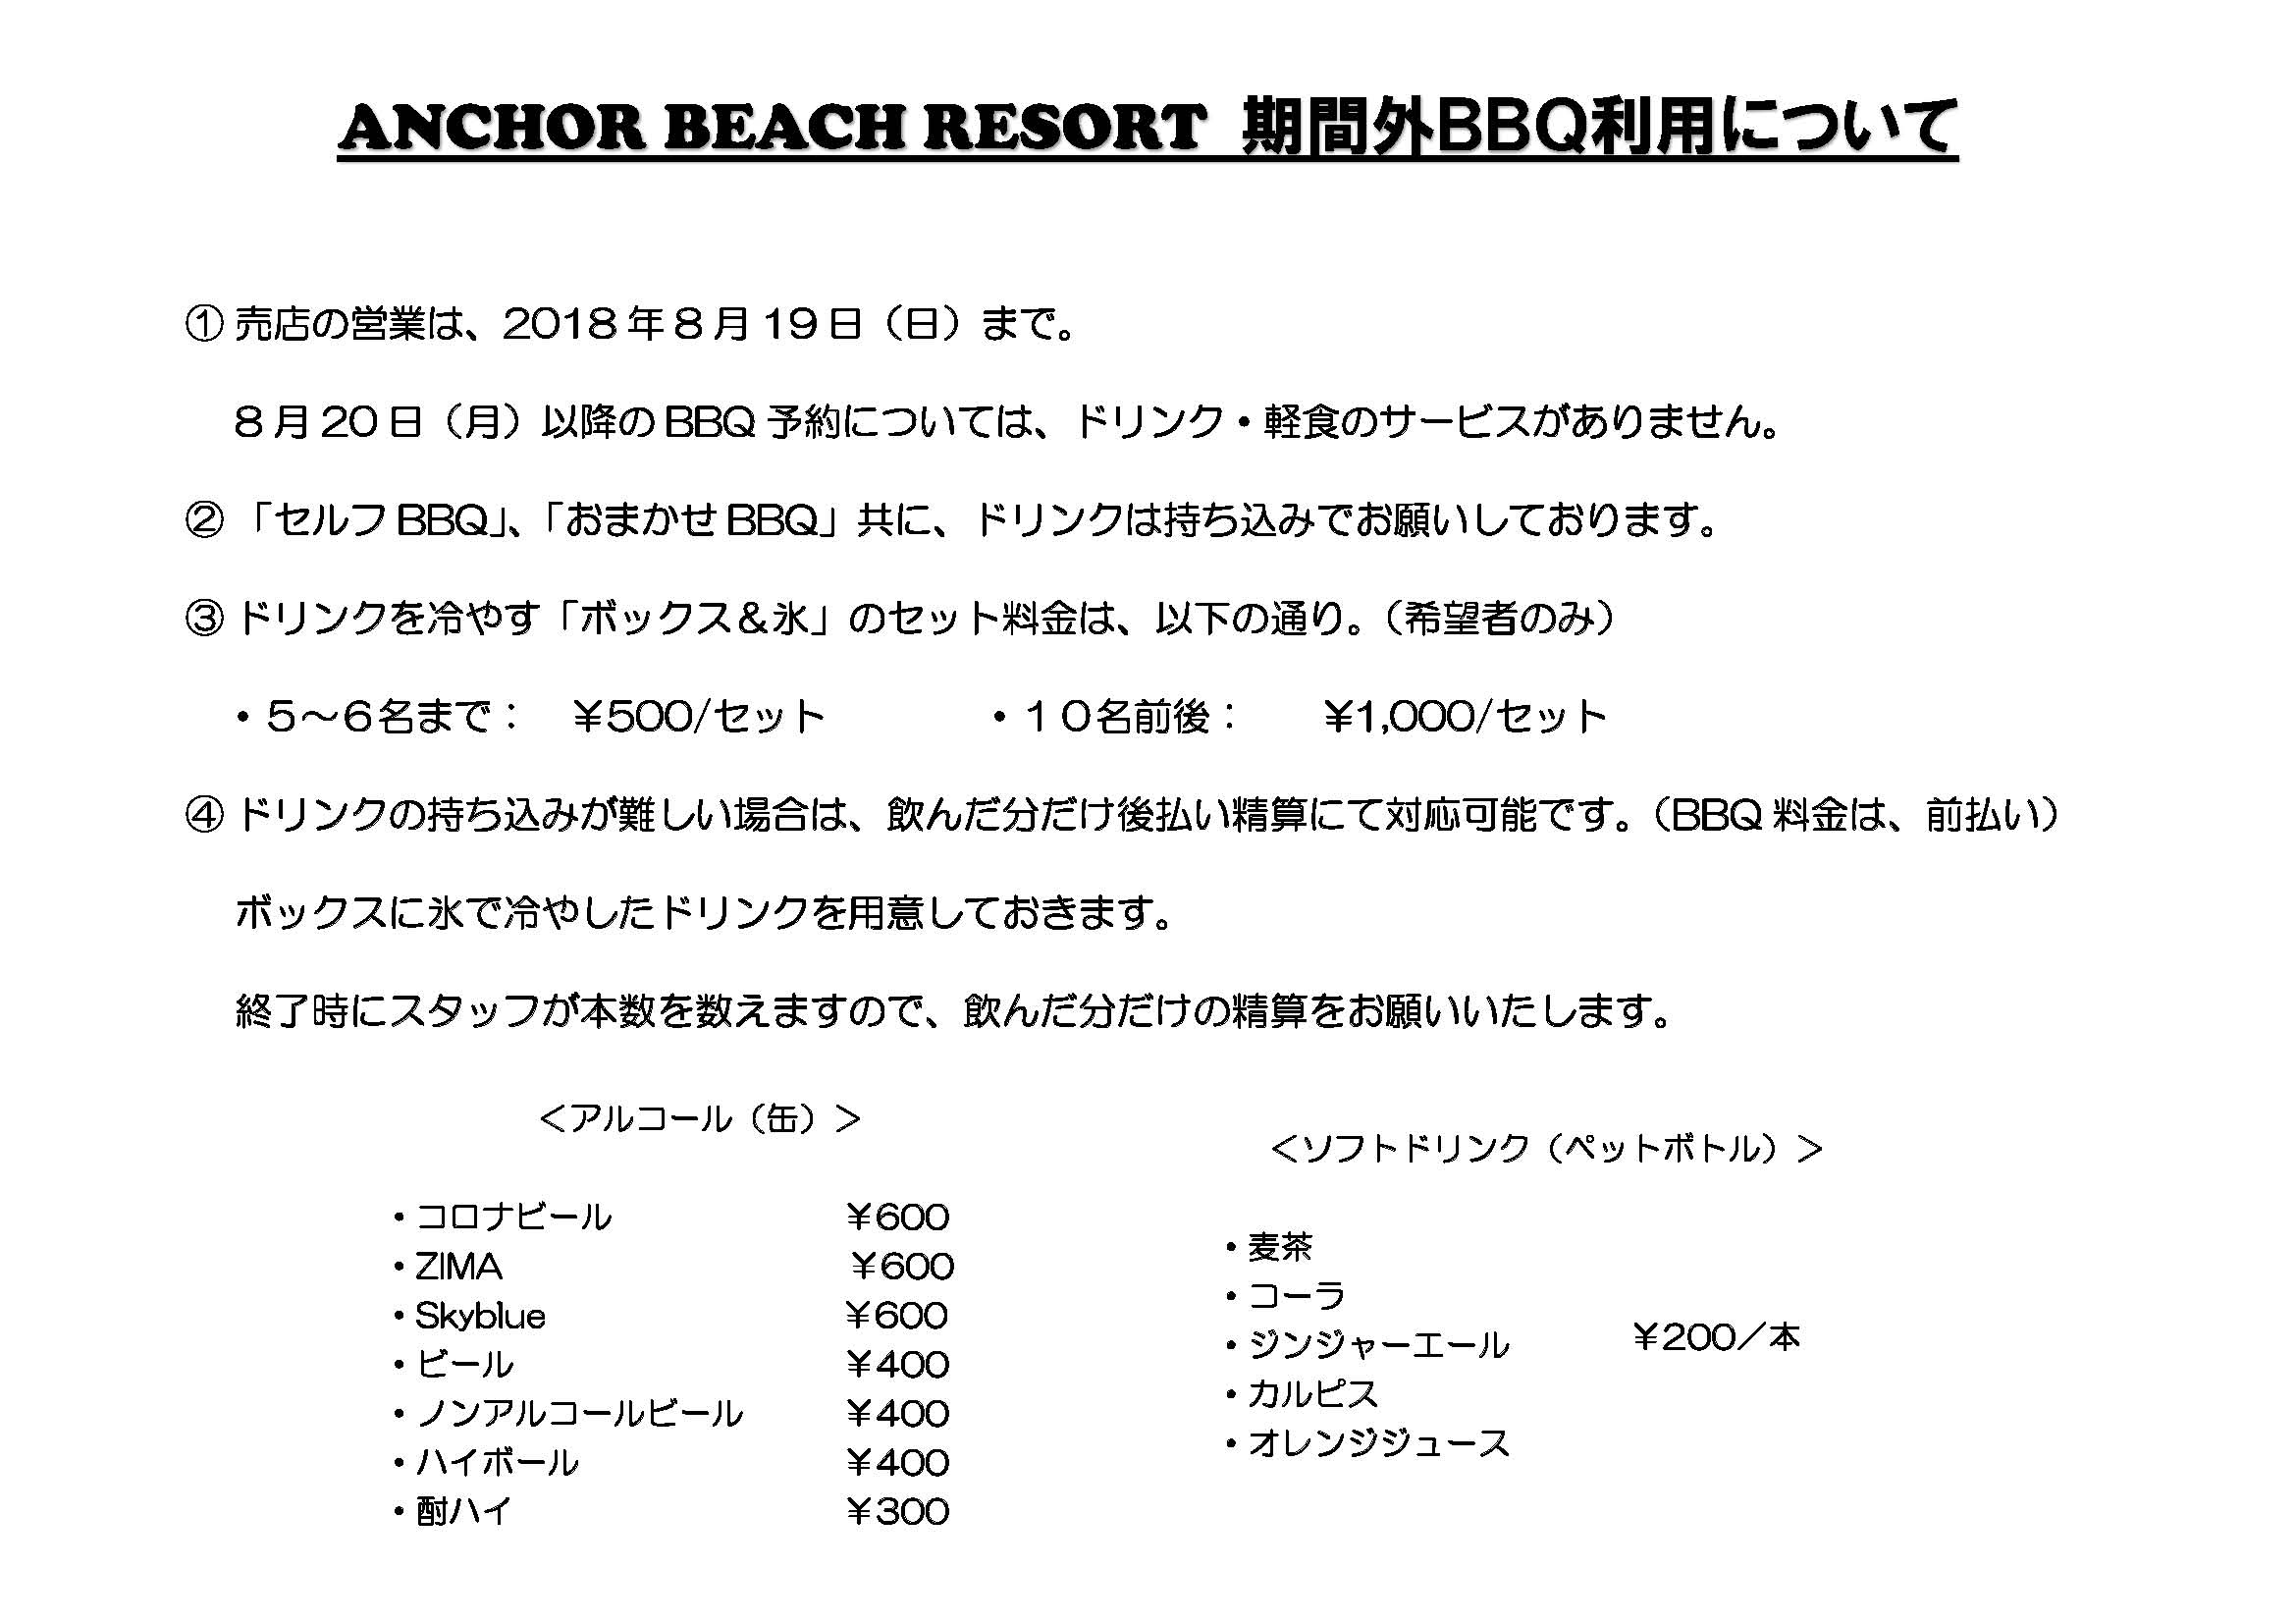 ANCHOR BEACH RESORT 期間外BBQご利用について(2018)_ページ_2.jpg